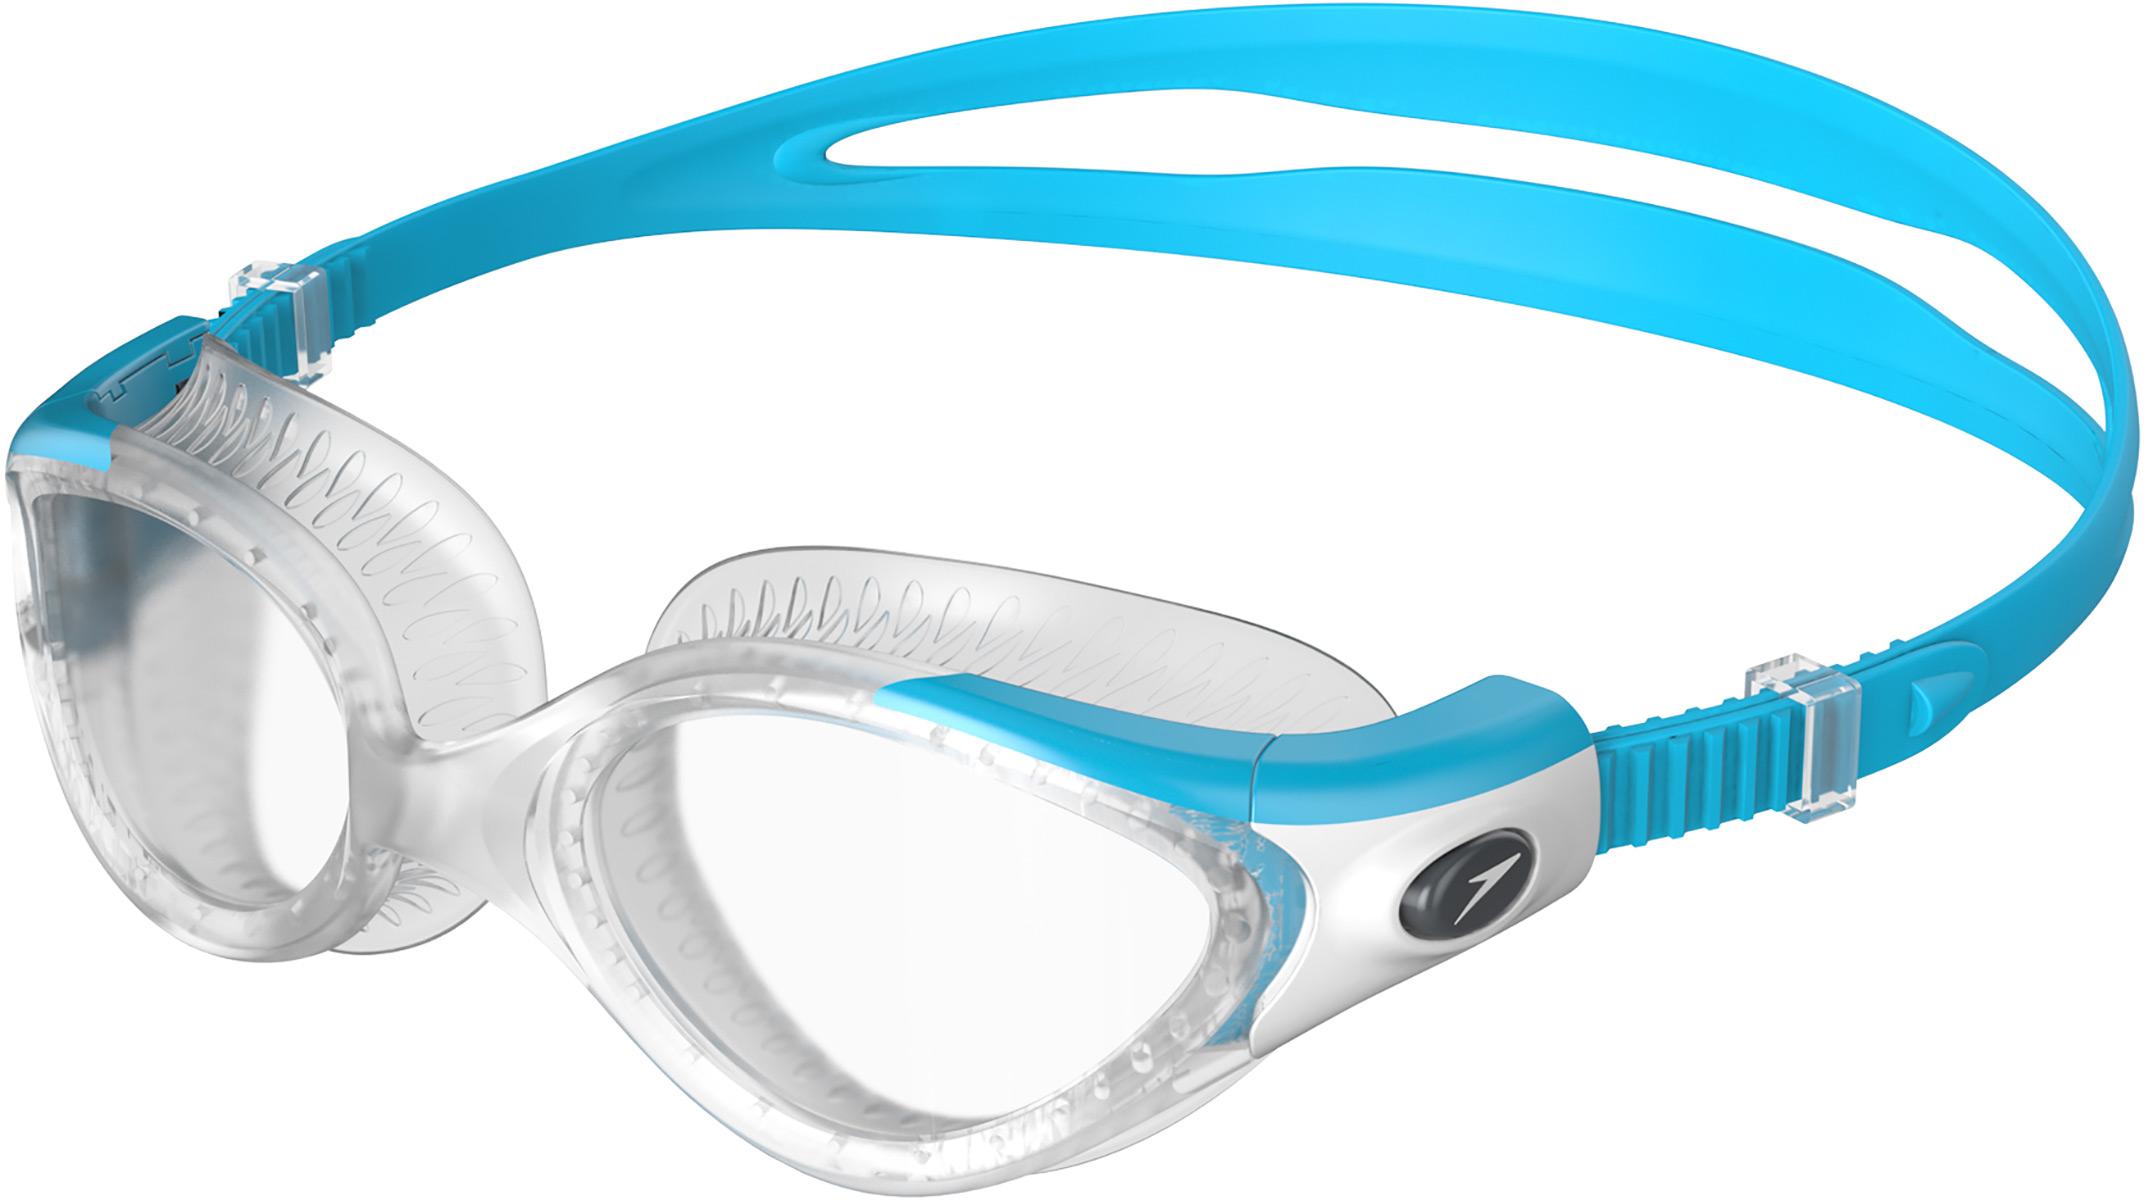 Speedo Womens Futura Biofuse Flexiseal Goggles - Turquoise/clear